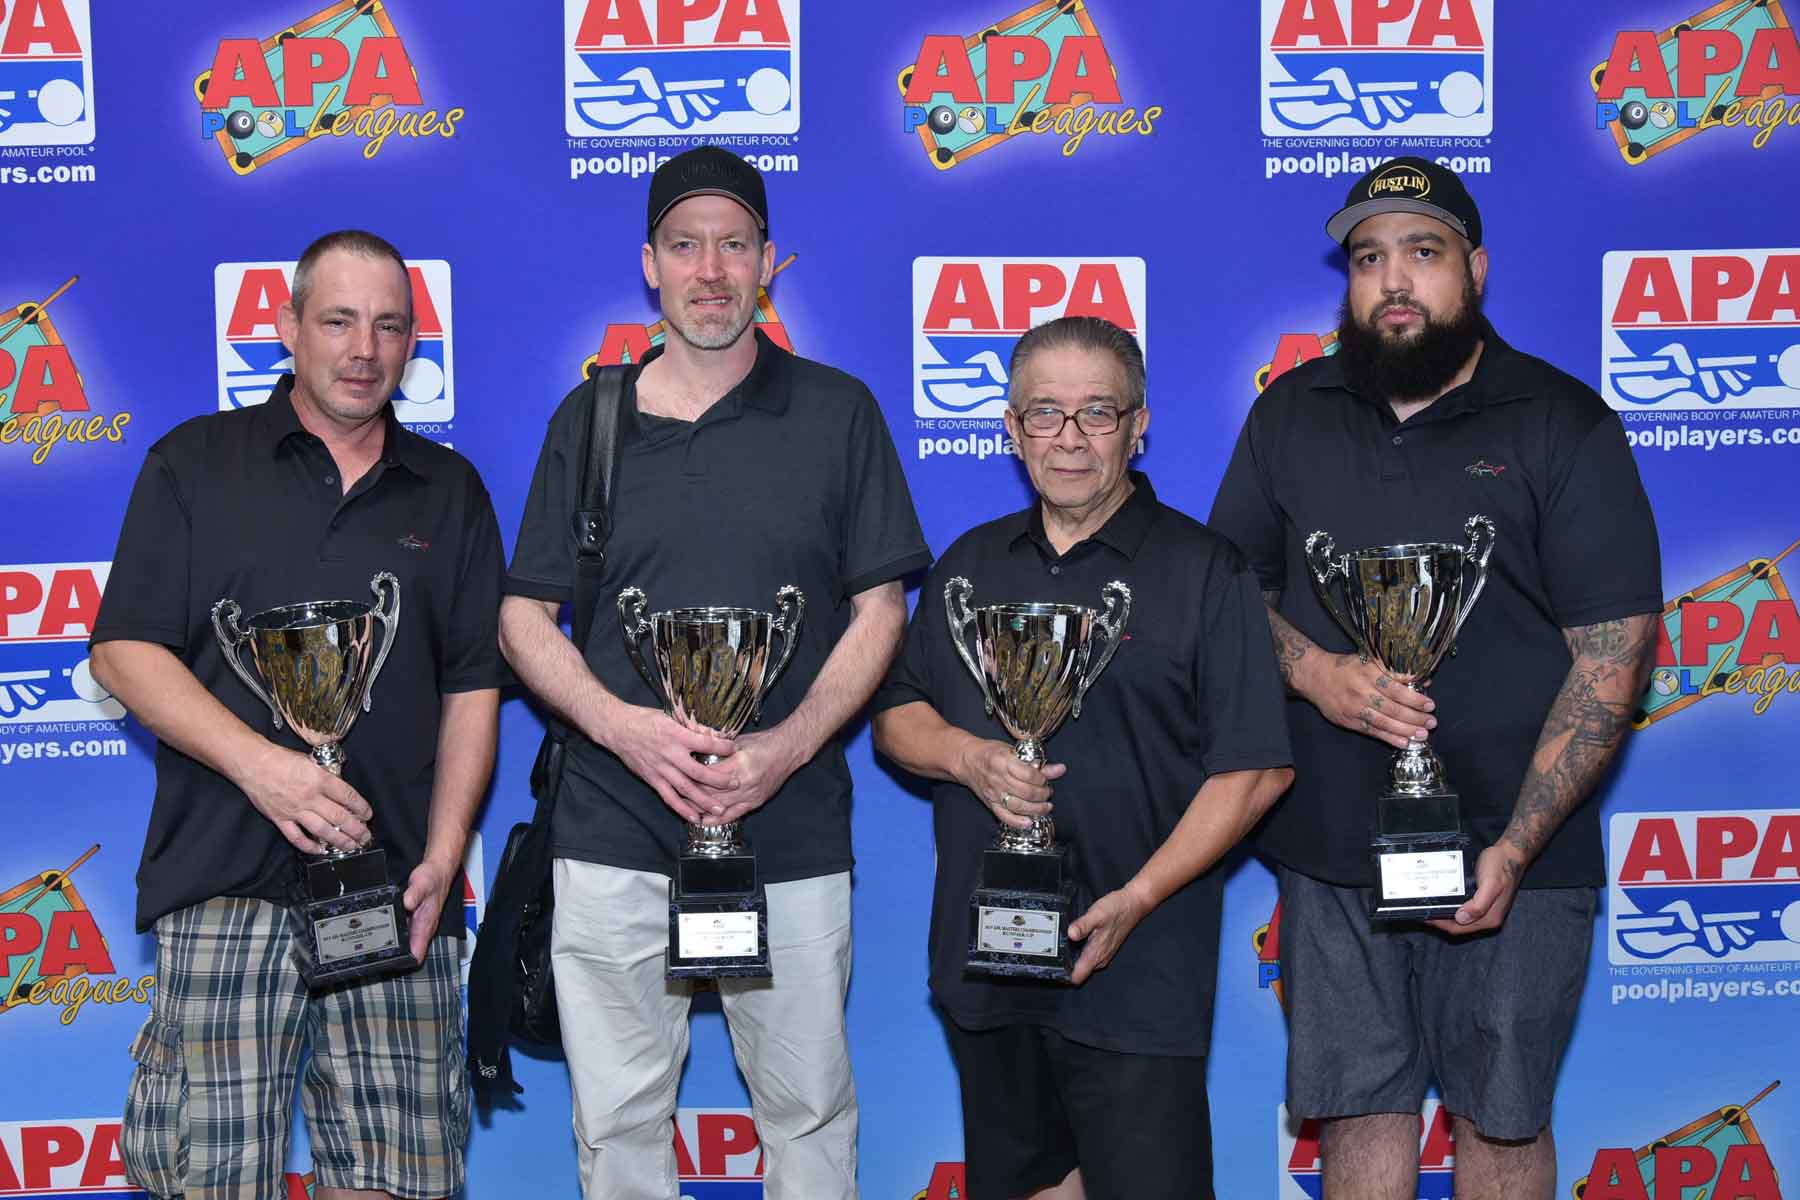 2019 APA Masters Championship Results - American Poolplayers Association